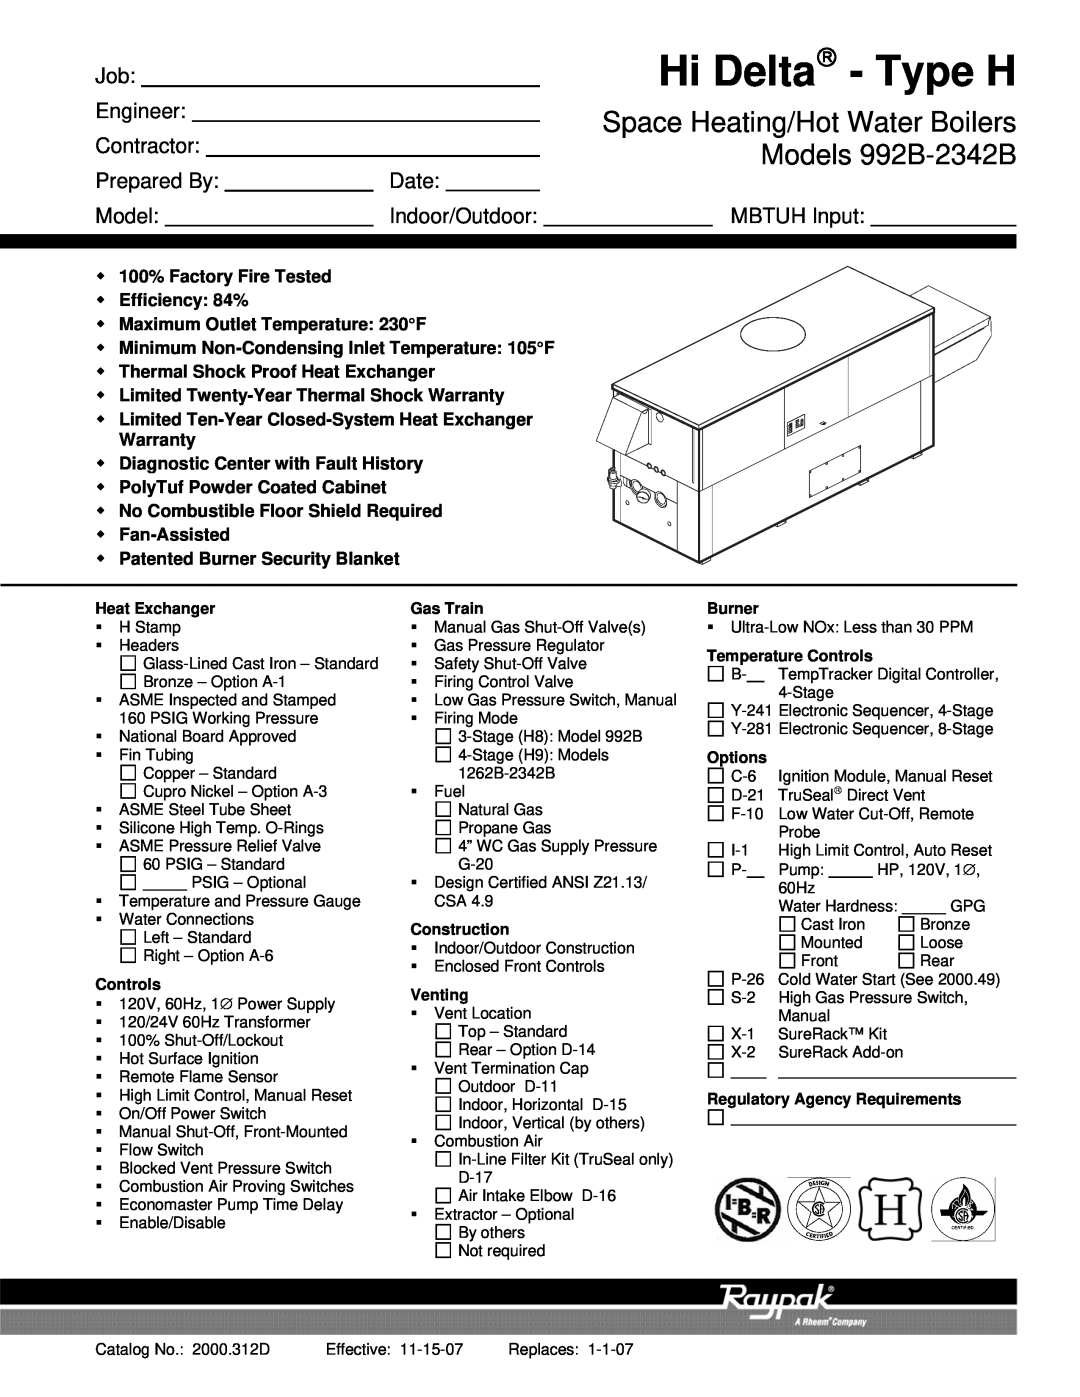 Raypak warranty Hi Delta→ - Type H, Space Heating/Hot Water Boilers, Models 992B-2342B, Engineer, Contractor, Date 